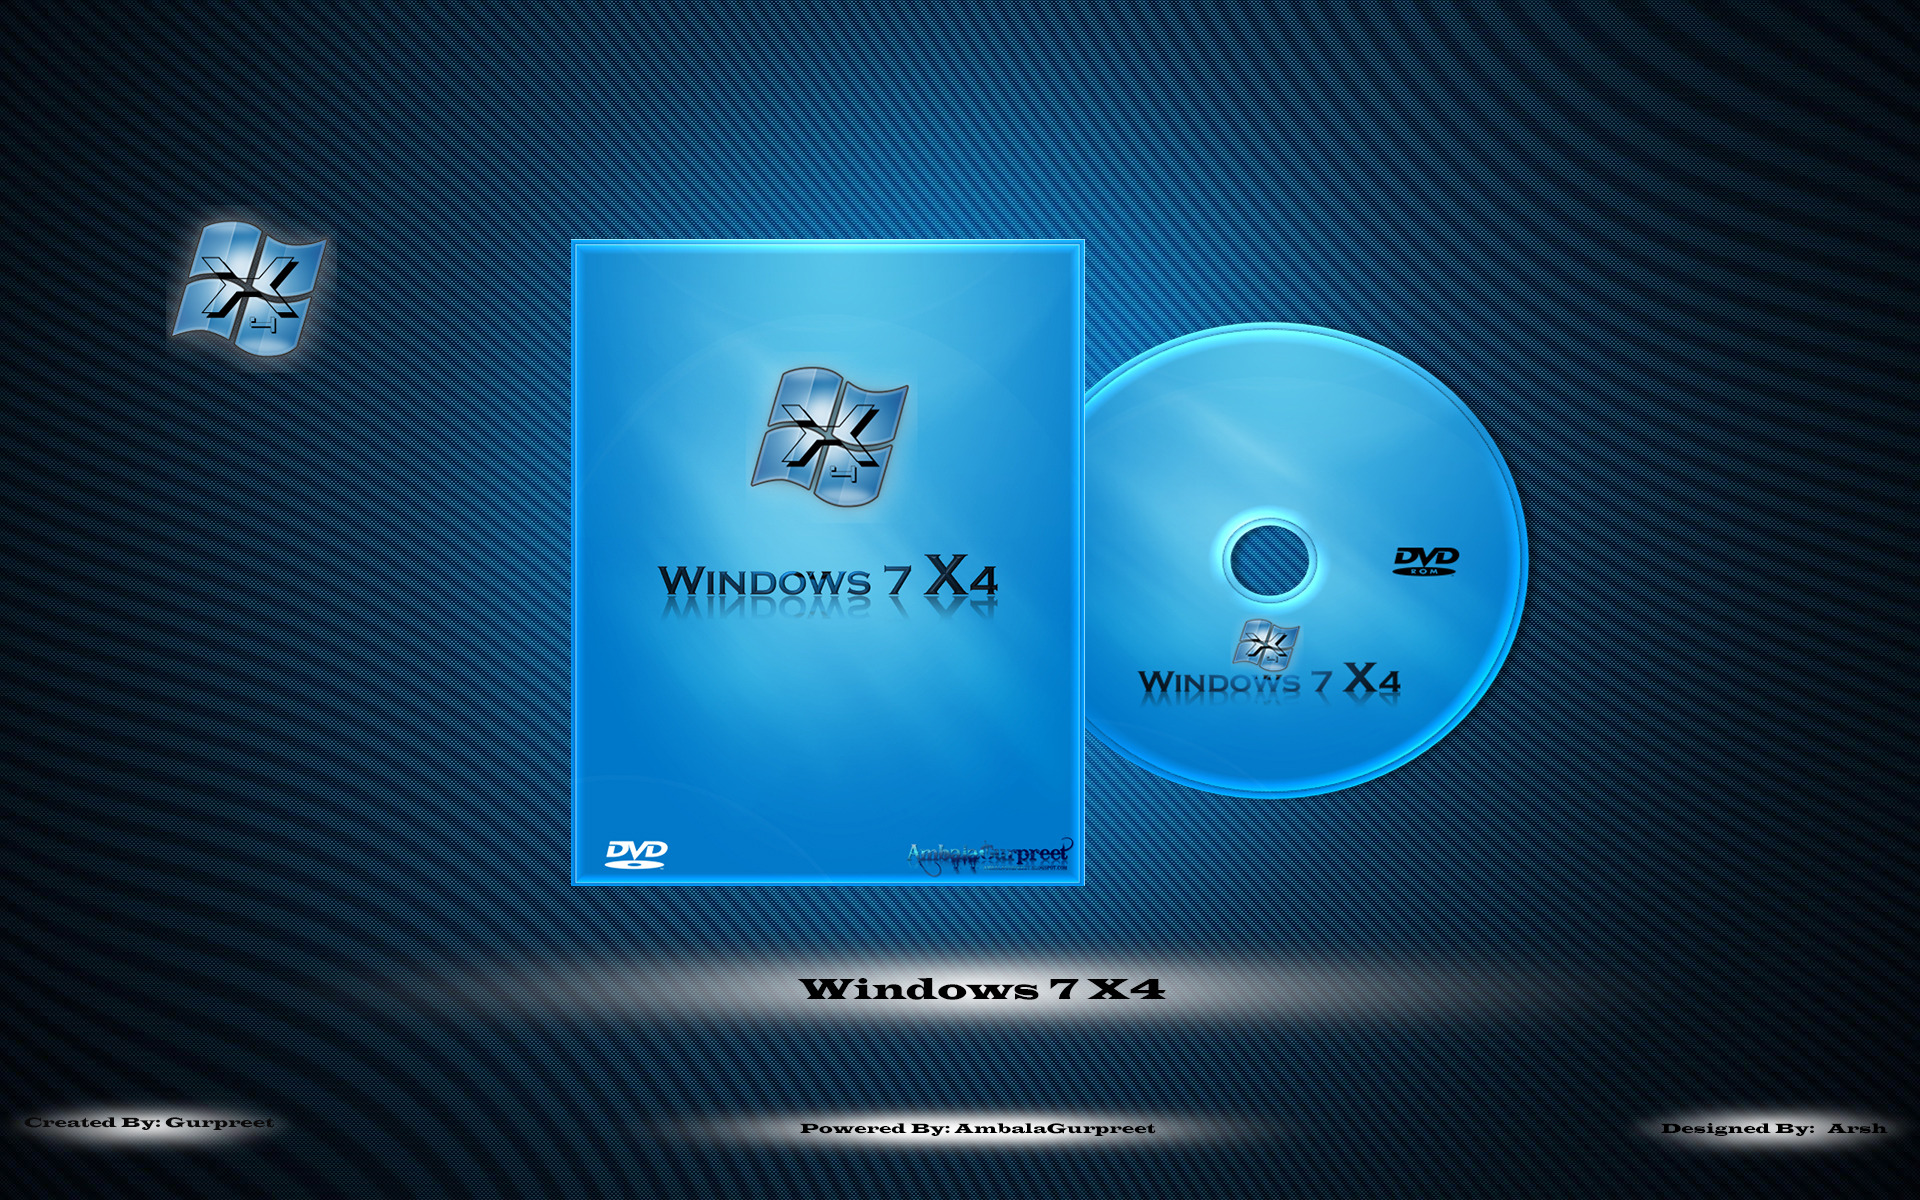 windows_7_x4_dvd_cover_by_ambalagurpreet-d5oz098.jpg